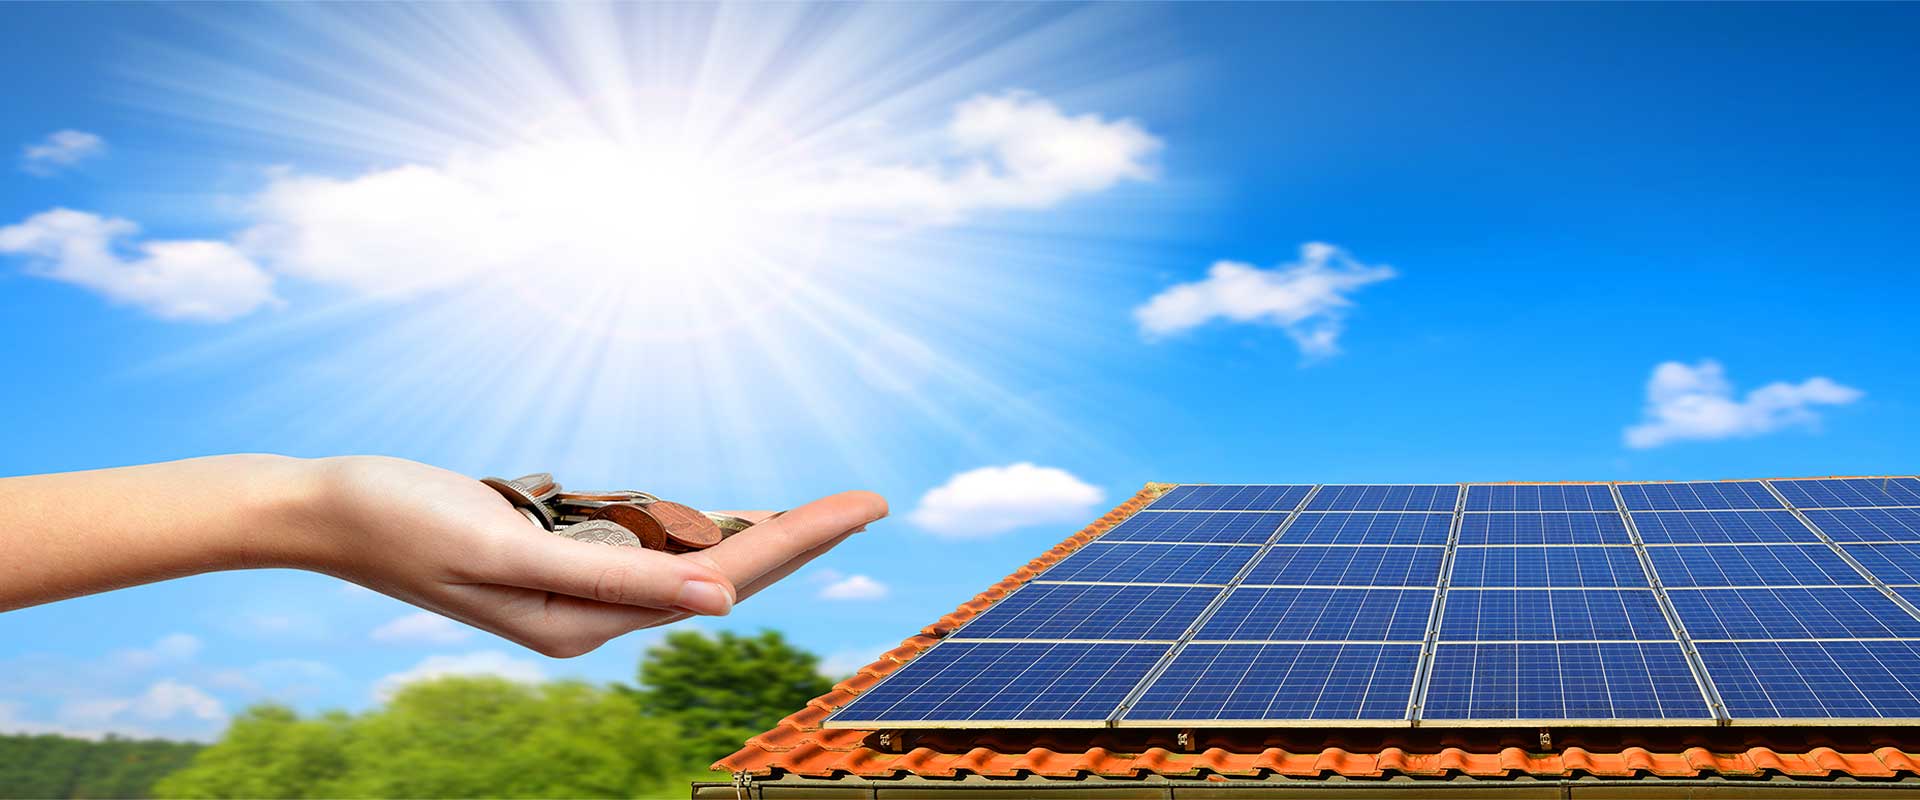 california-multifamily-affordable-solar-housing-mash-program-ysg